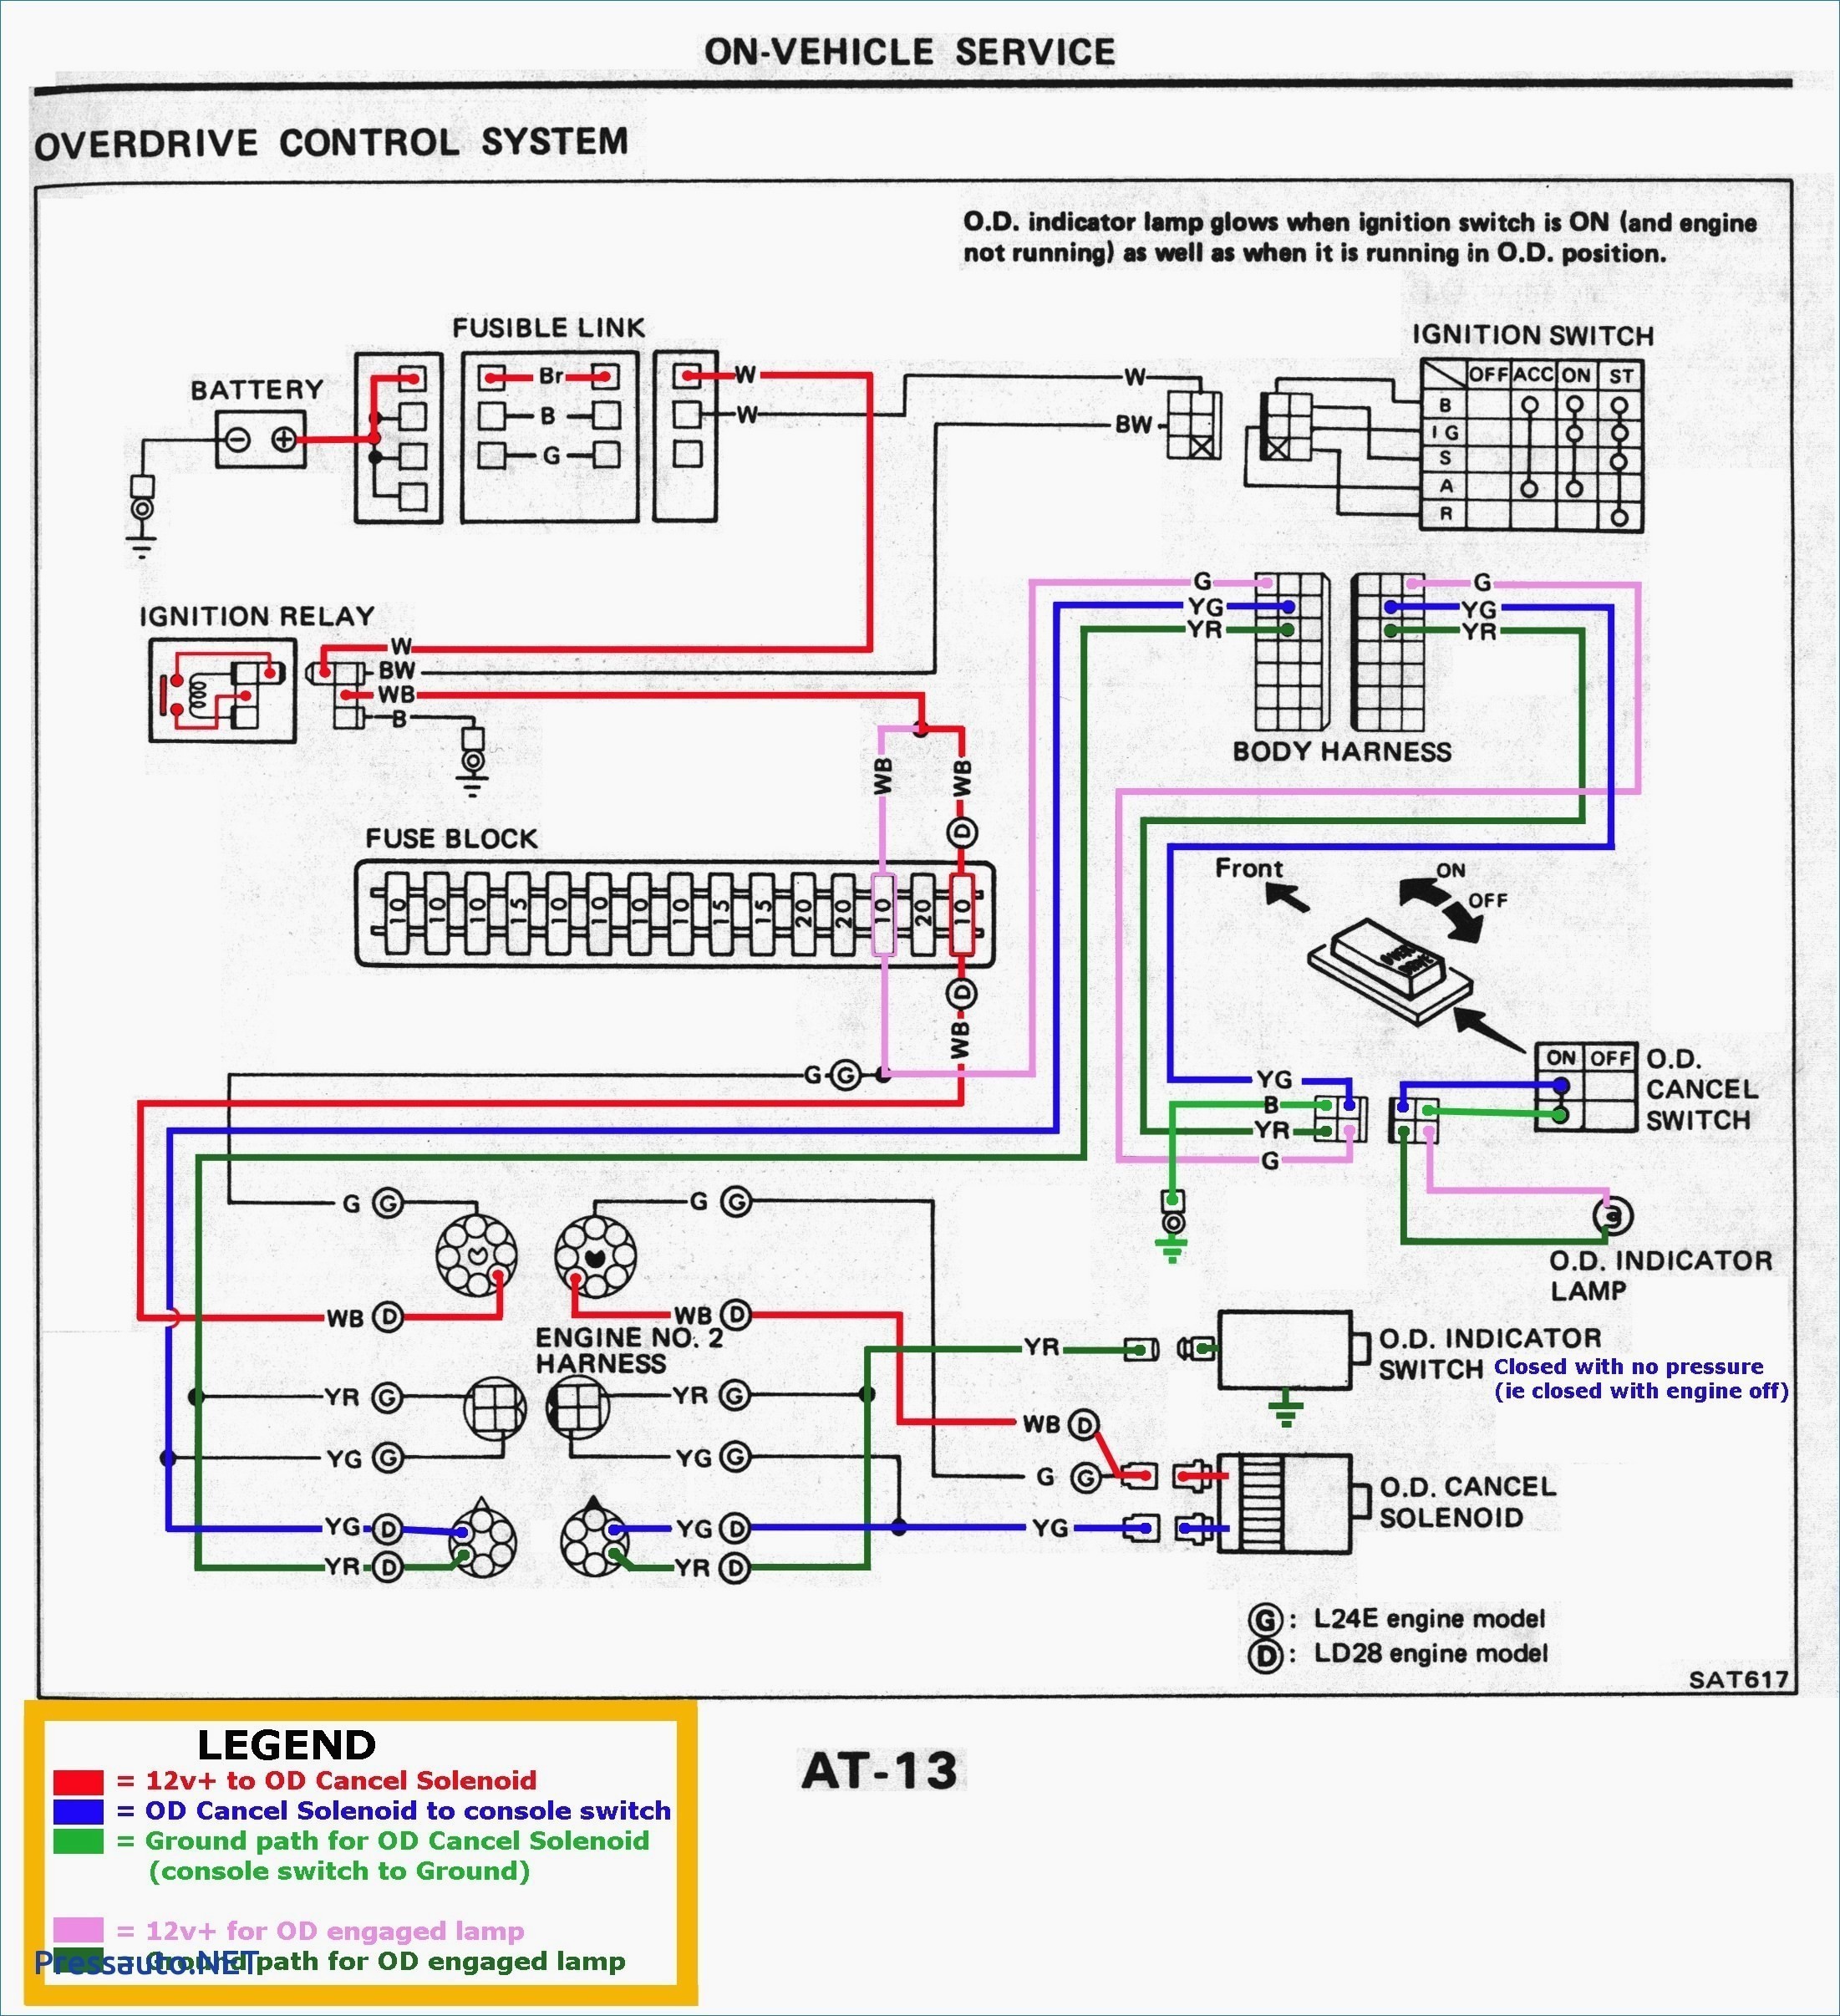 Xbox 360 Power Supply Wiring Diagram Hd 3961] Circuit Diagram with Simple Circuit Of Xbox 360 Power Supply Wiring Diagram